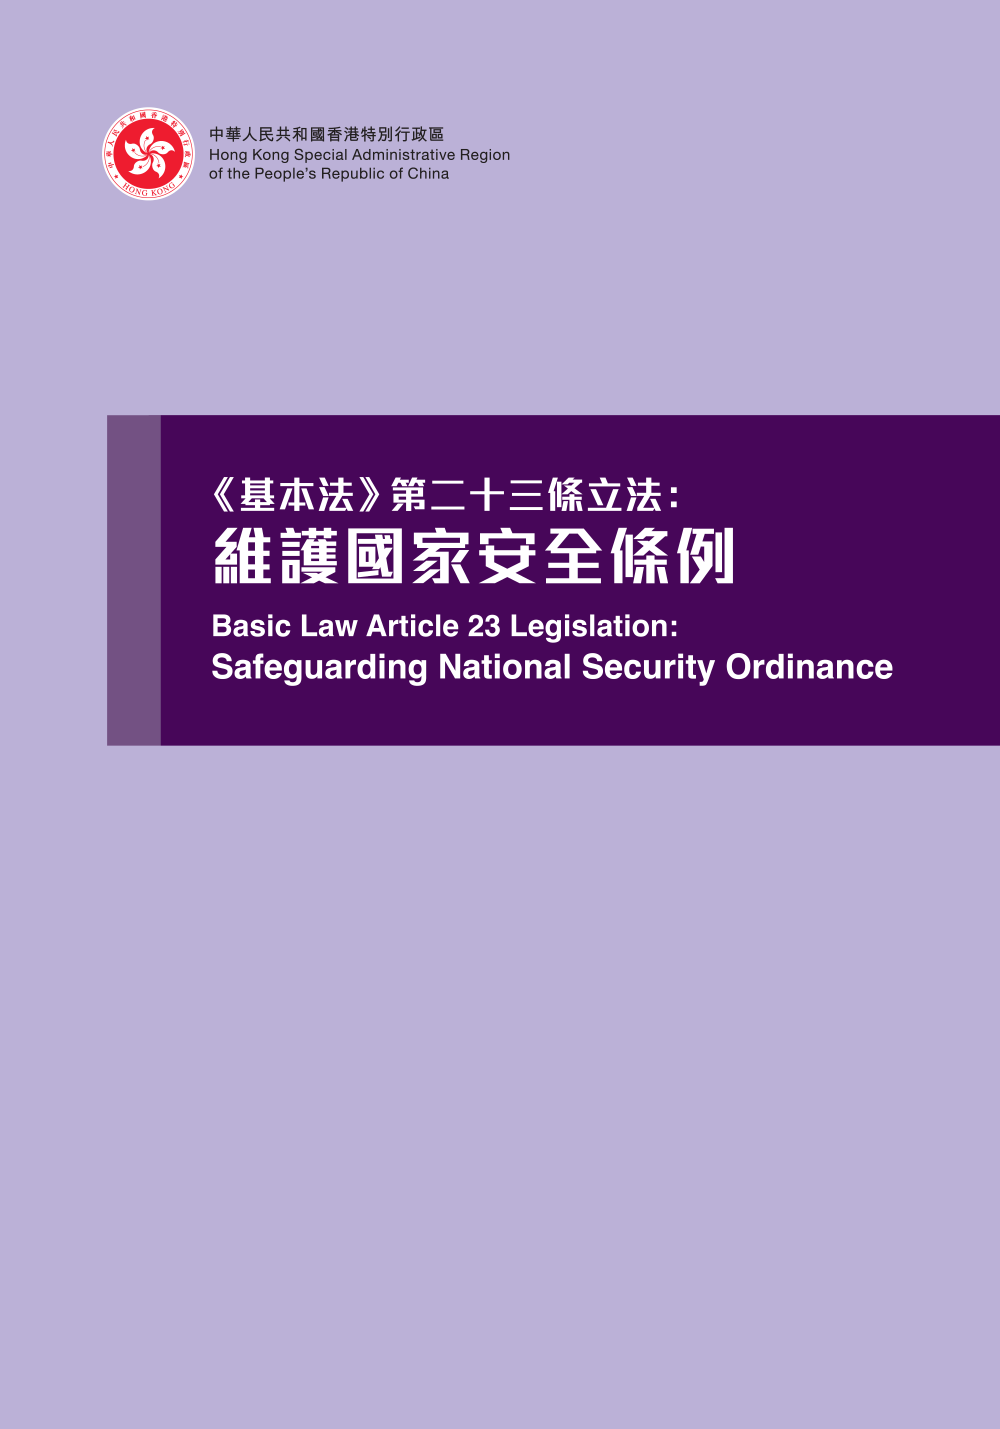 Pamphlet on Safeguarding National Security Ordinance